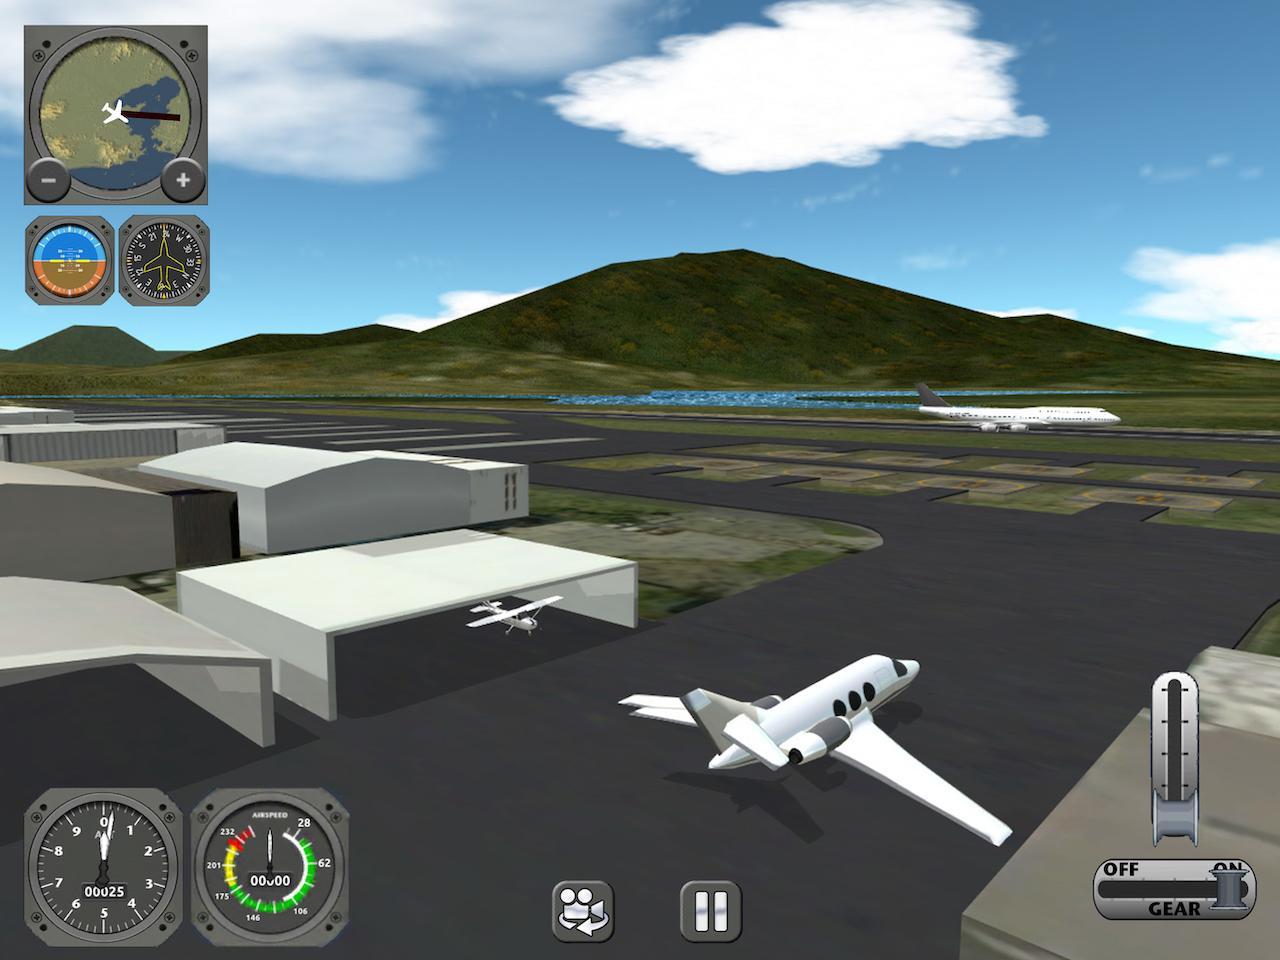 Flight Simulator 2013 Flywings Rio De Janeiro For Android Apk Download - roblox flight simulator 2013